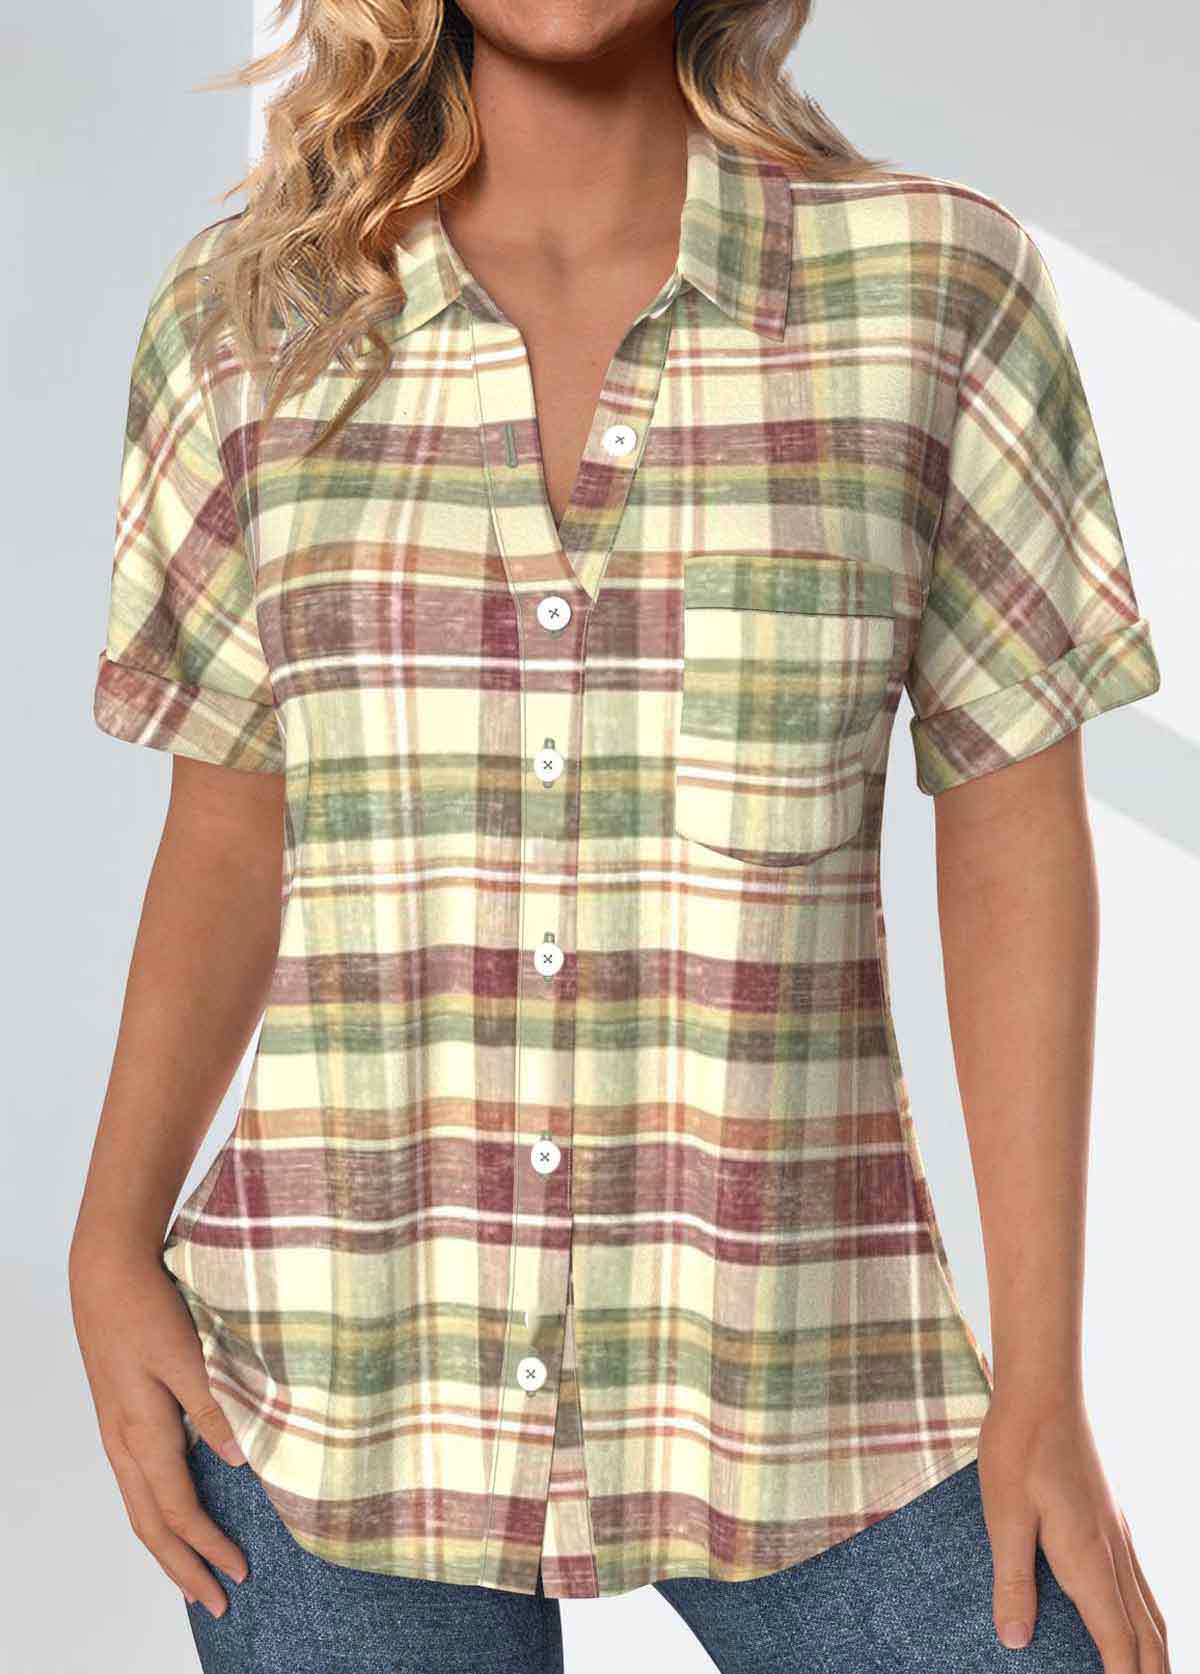 ROTITA Pocket Plaid Multi Color Shirt Collar Short Sleeve Blouse